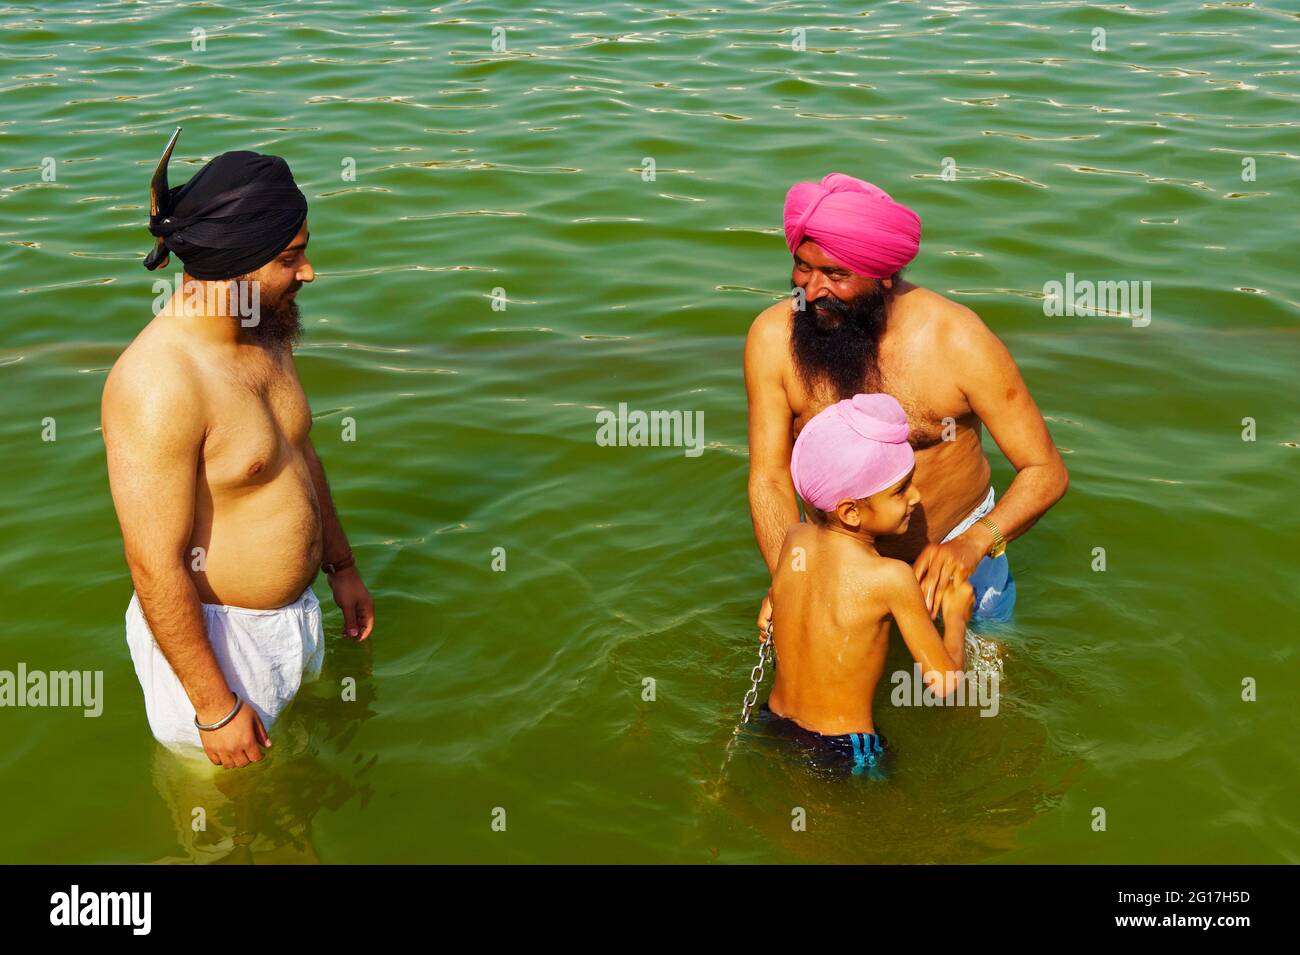 India, Punjab, Anandpur Sahib, Hola Mohalla festival of Sikh comunity Stock Photo